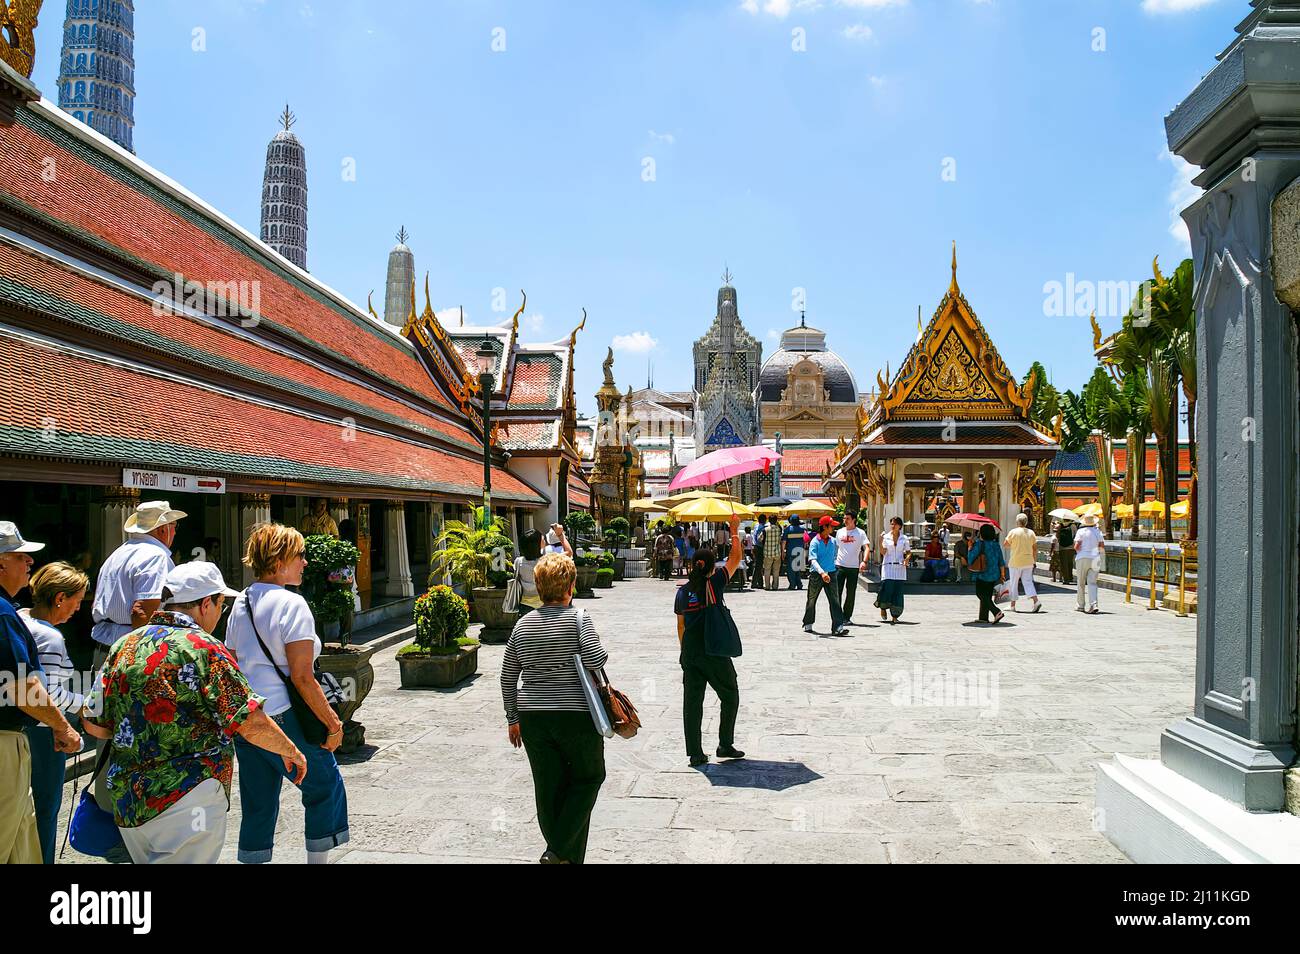 People visiting the Grand Palace, Temple of the Emerald Buddha, Wat Phra Kaew.  Bangkok, Thailand. NMR Stock Photo